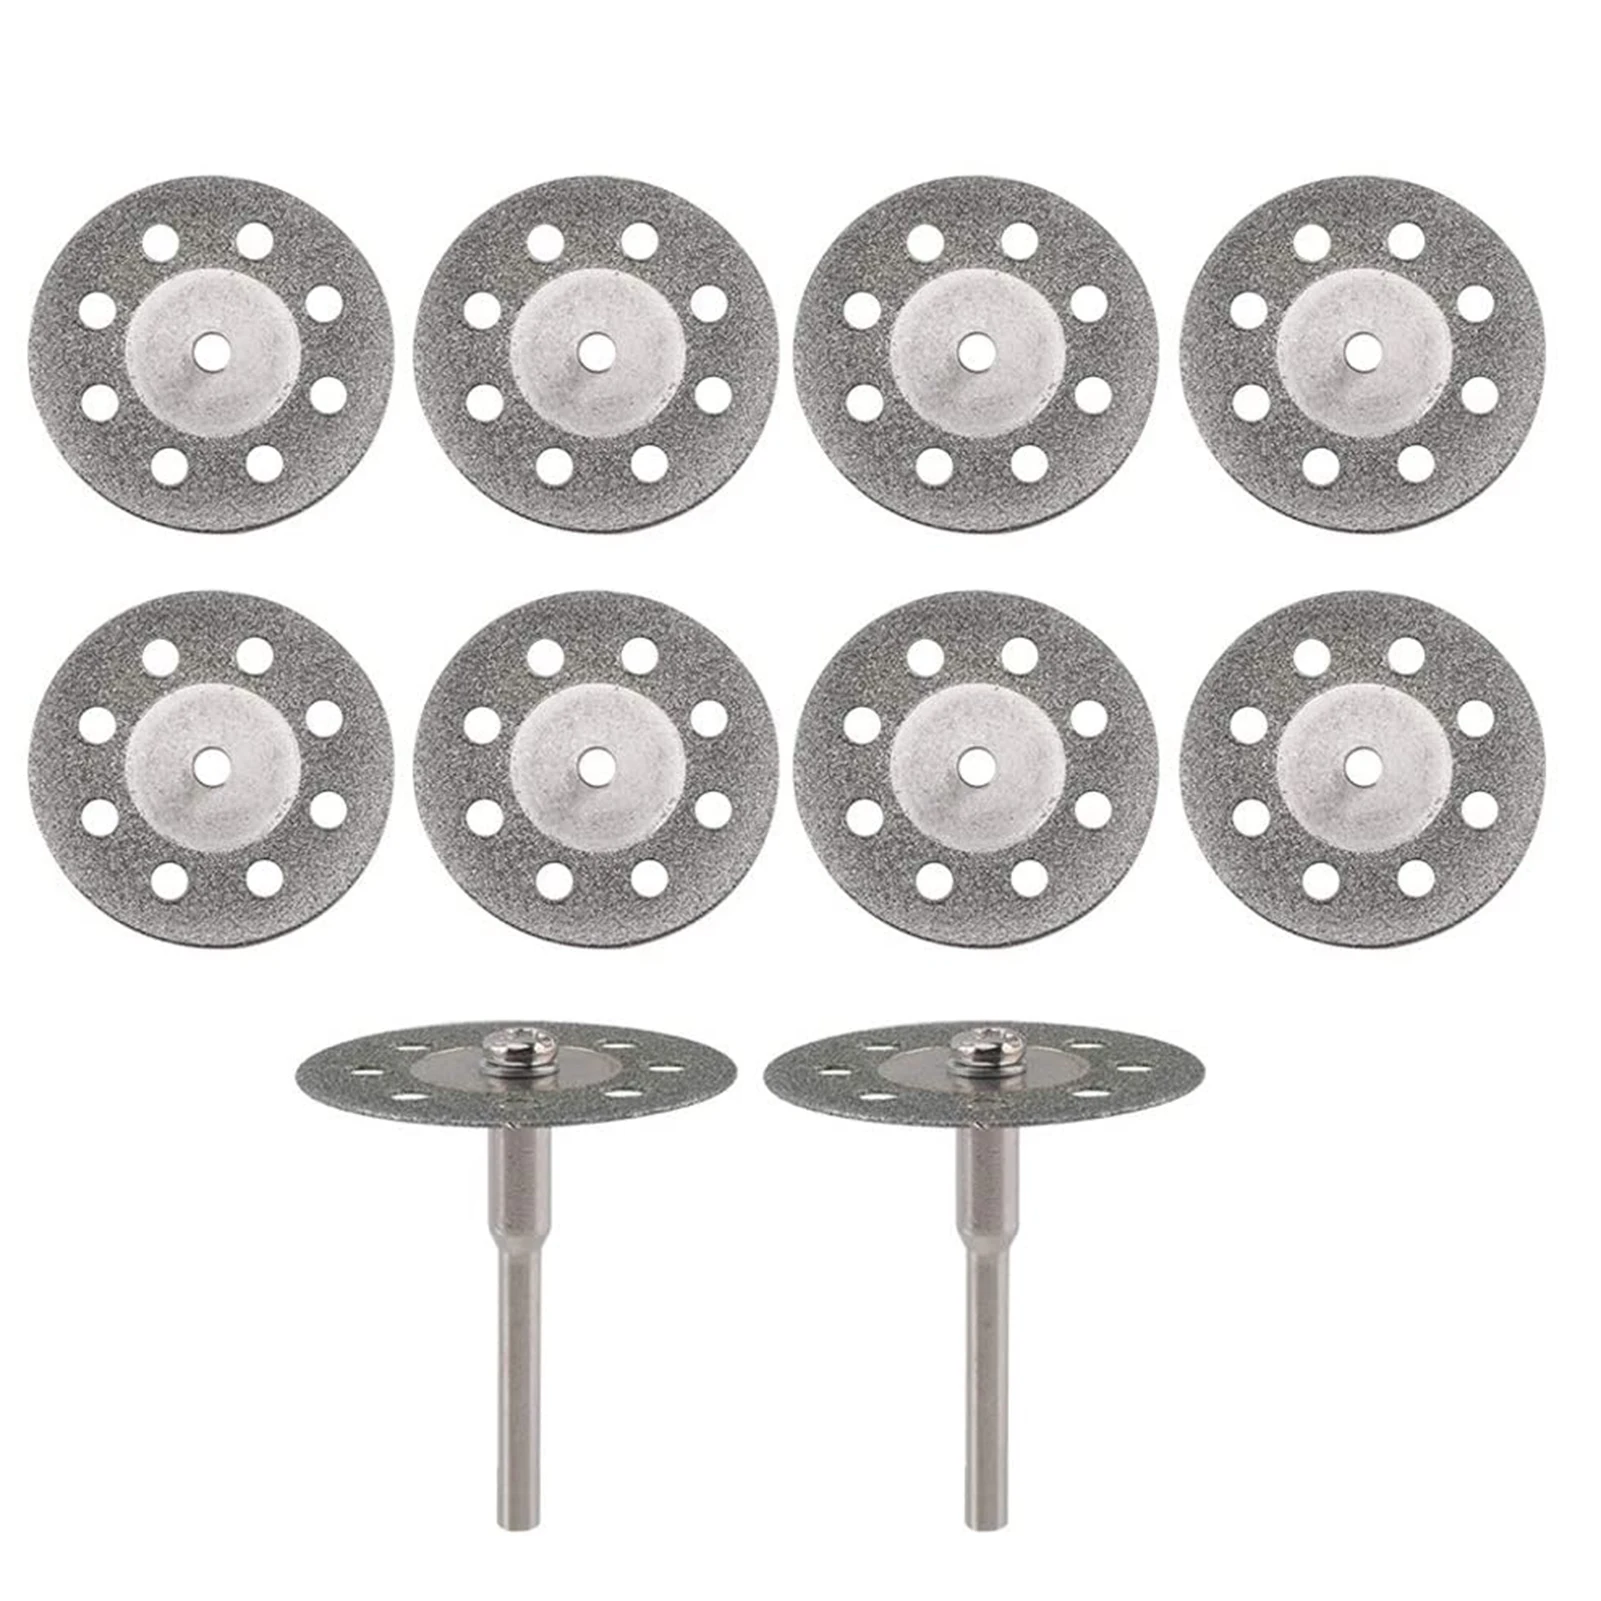 

10pcs Diamond Cutting Wheels 22mm Diameter Cut Off Discs with 2pcs 3mm Mandrels Replacement for Dremel Rotary Tools